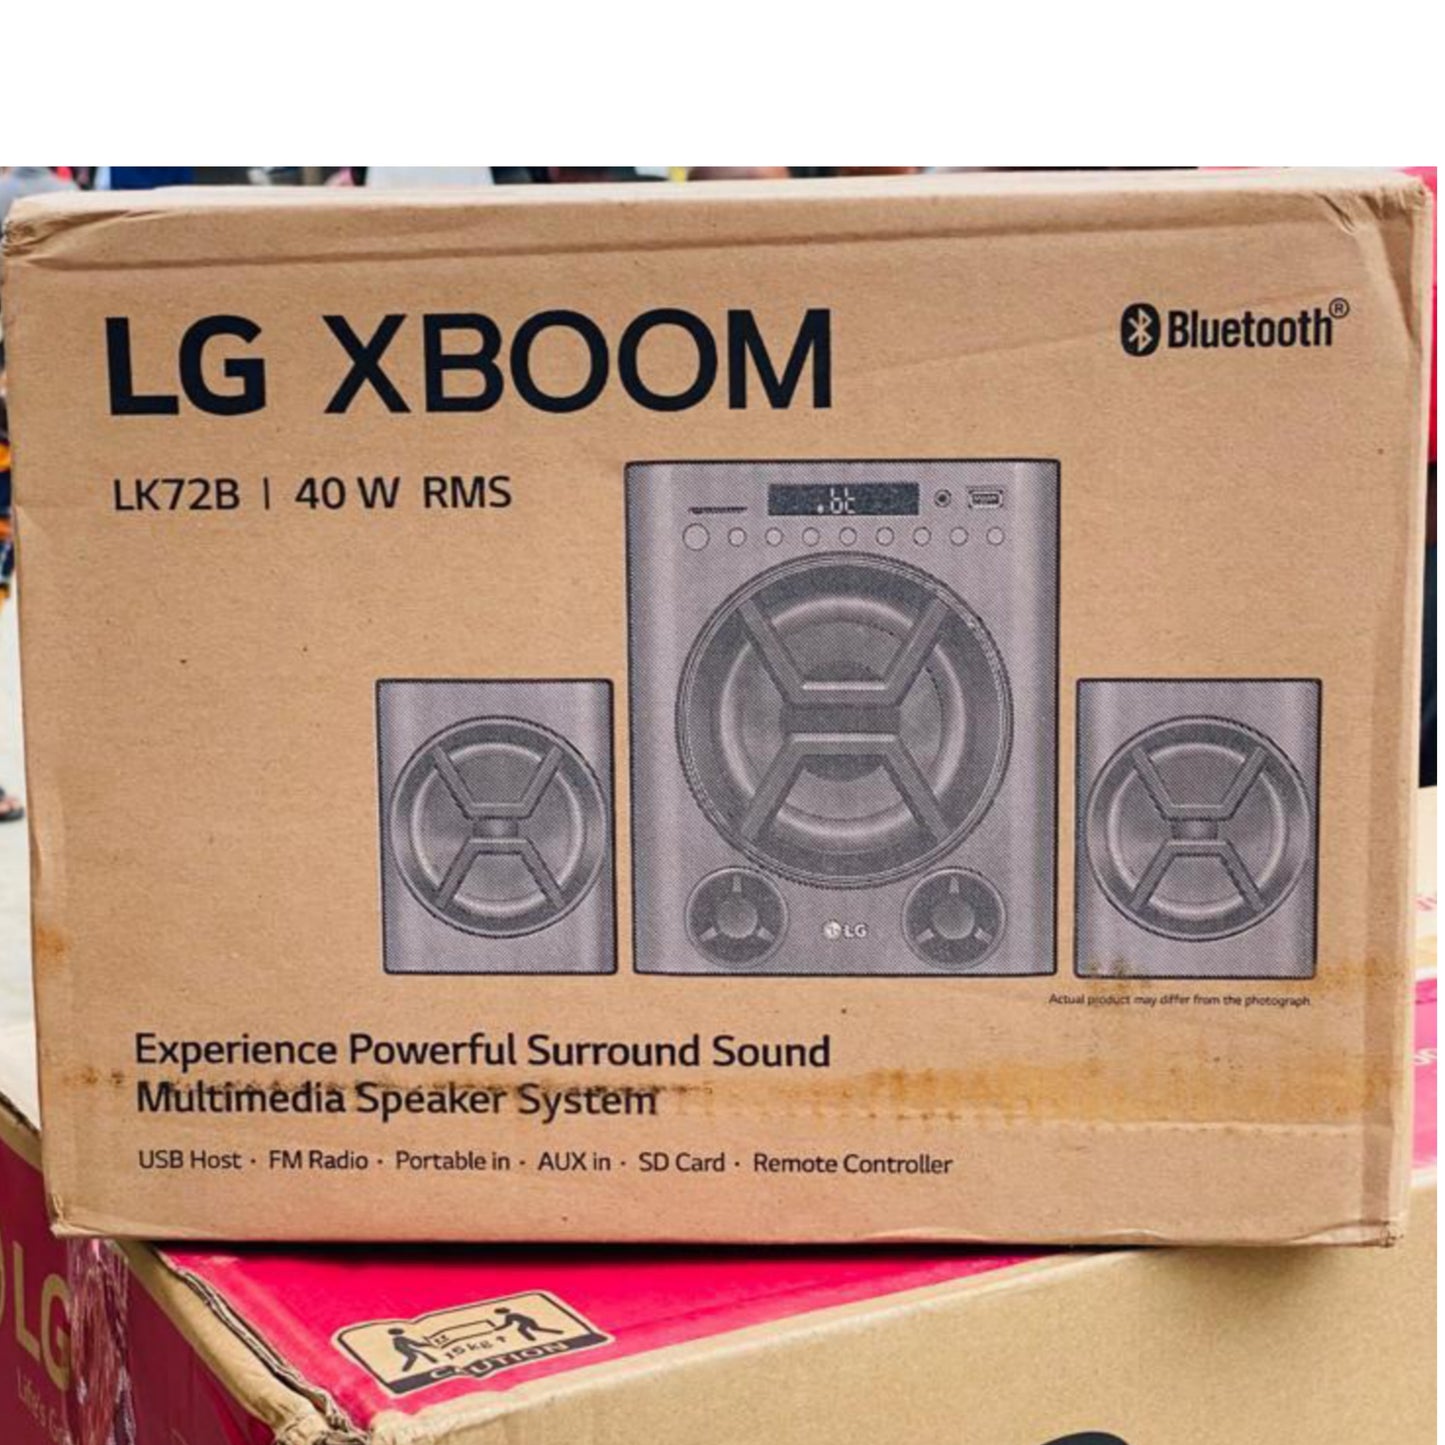 LG XBOOM LK72B Home Theater Sound System